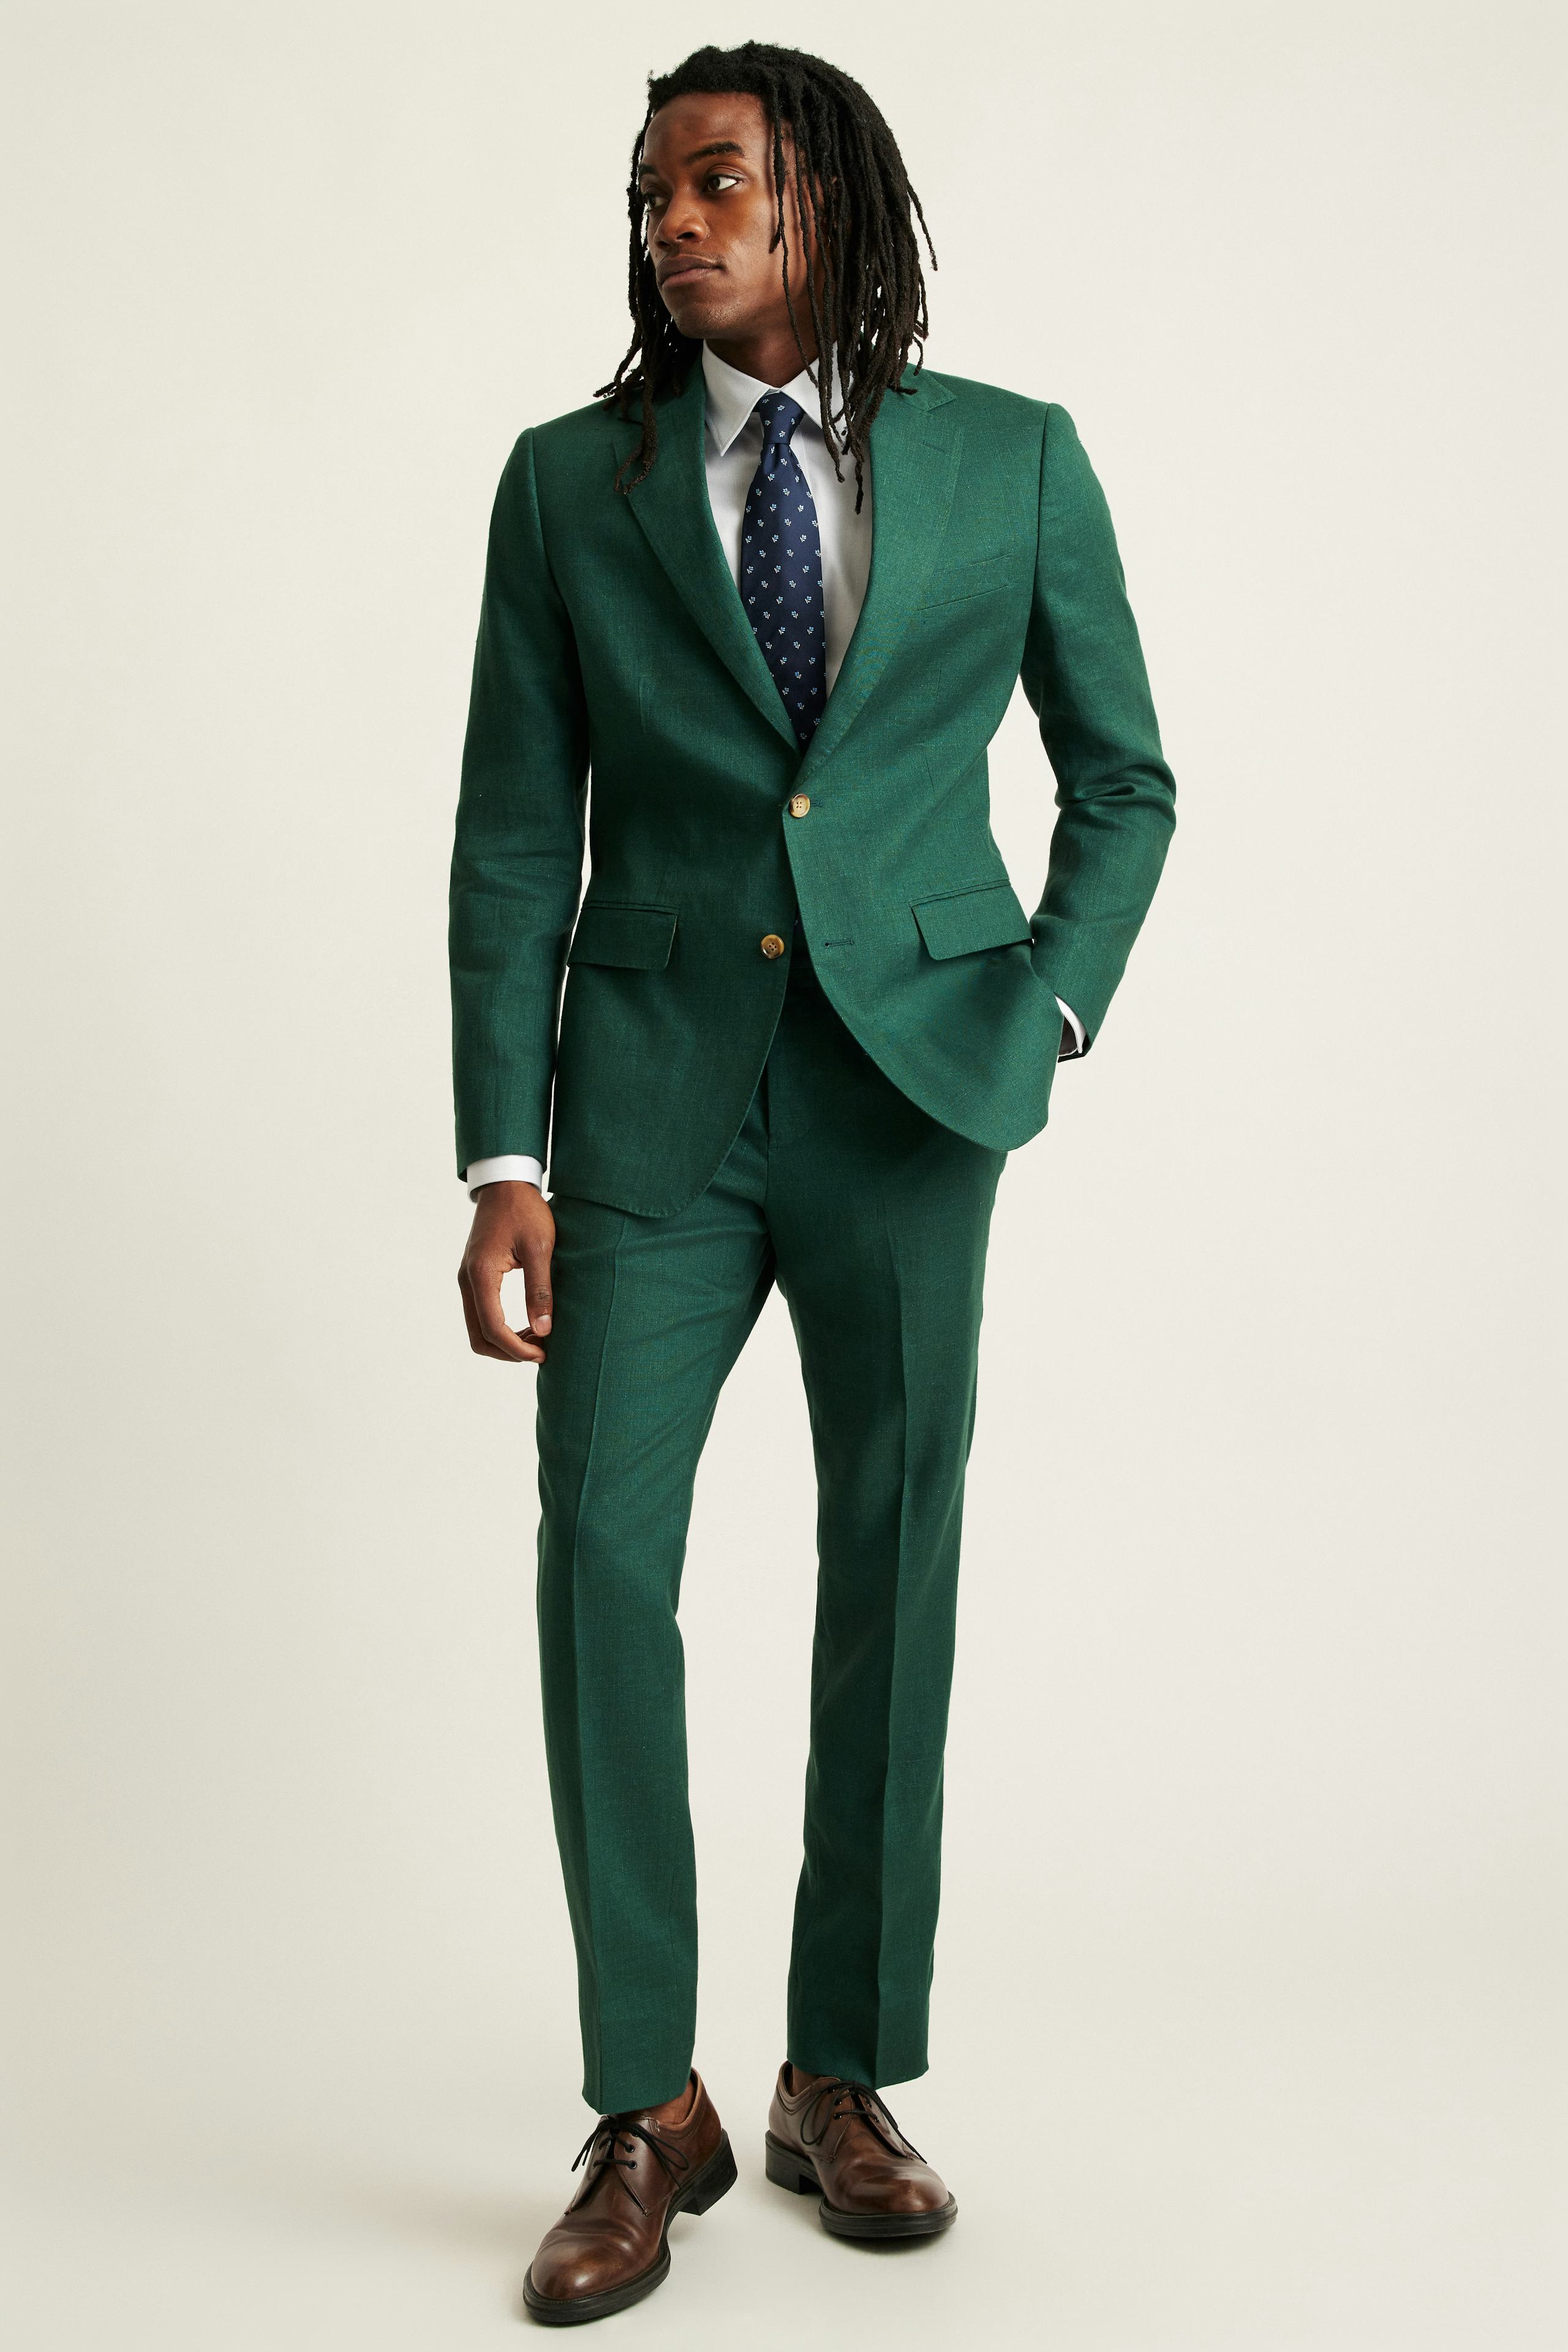 Jetsetter Italian Linen Suit